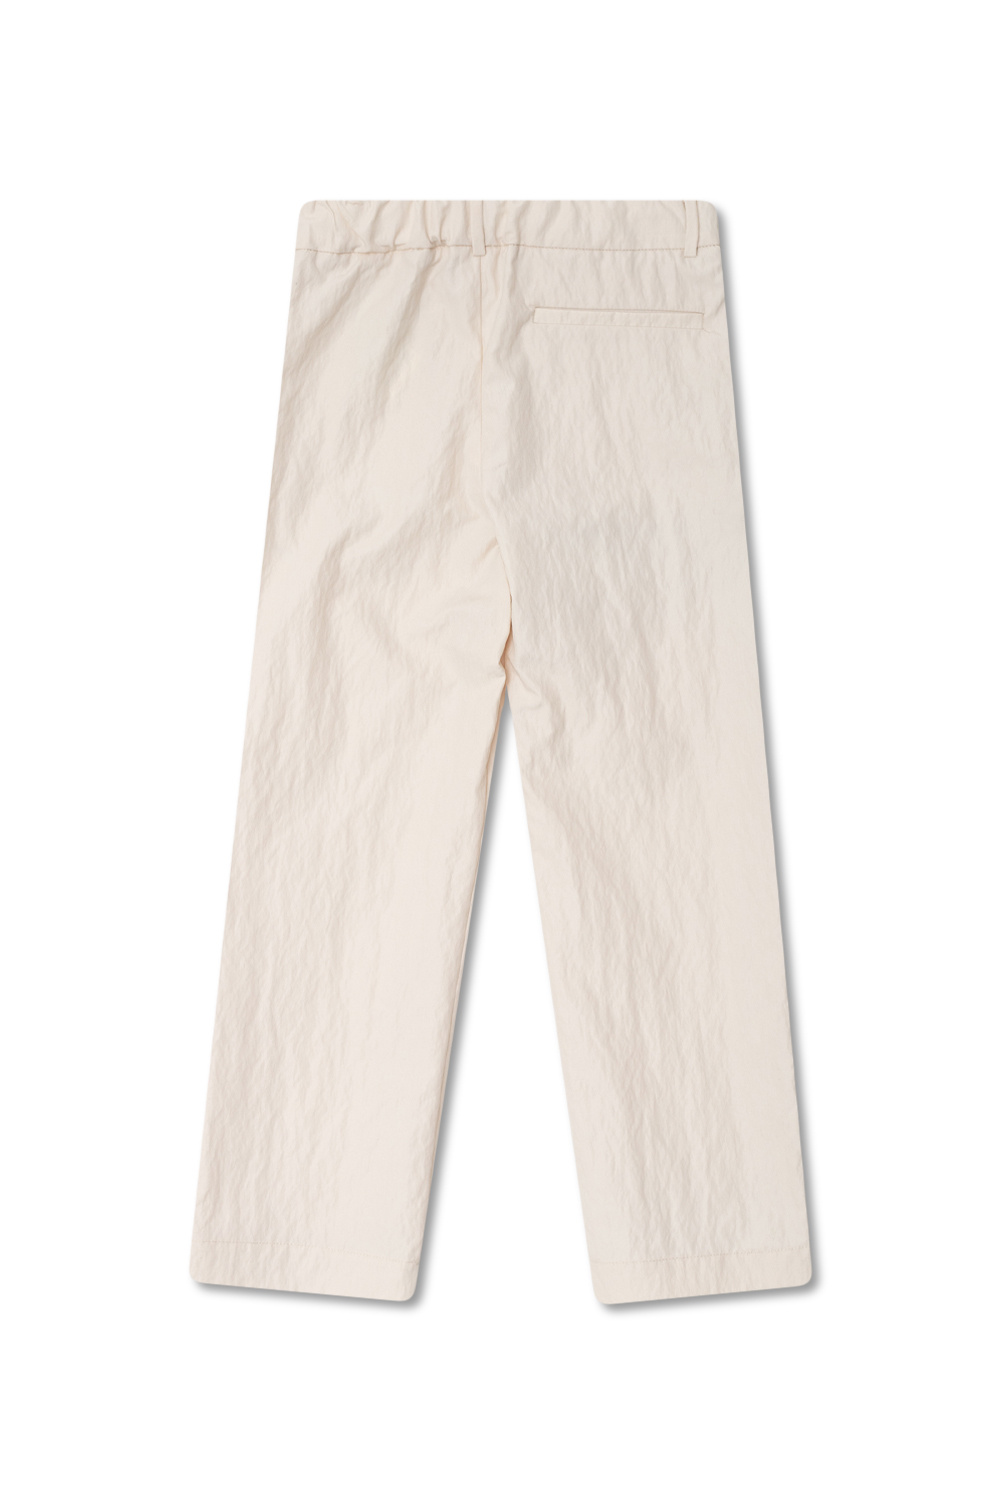 Fendi Kids Cotton Gingham trousers